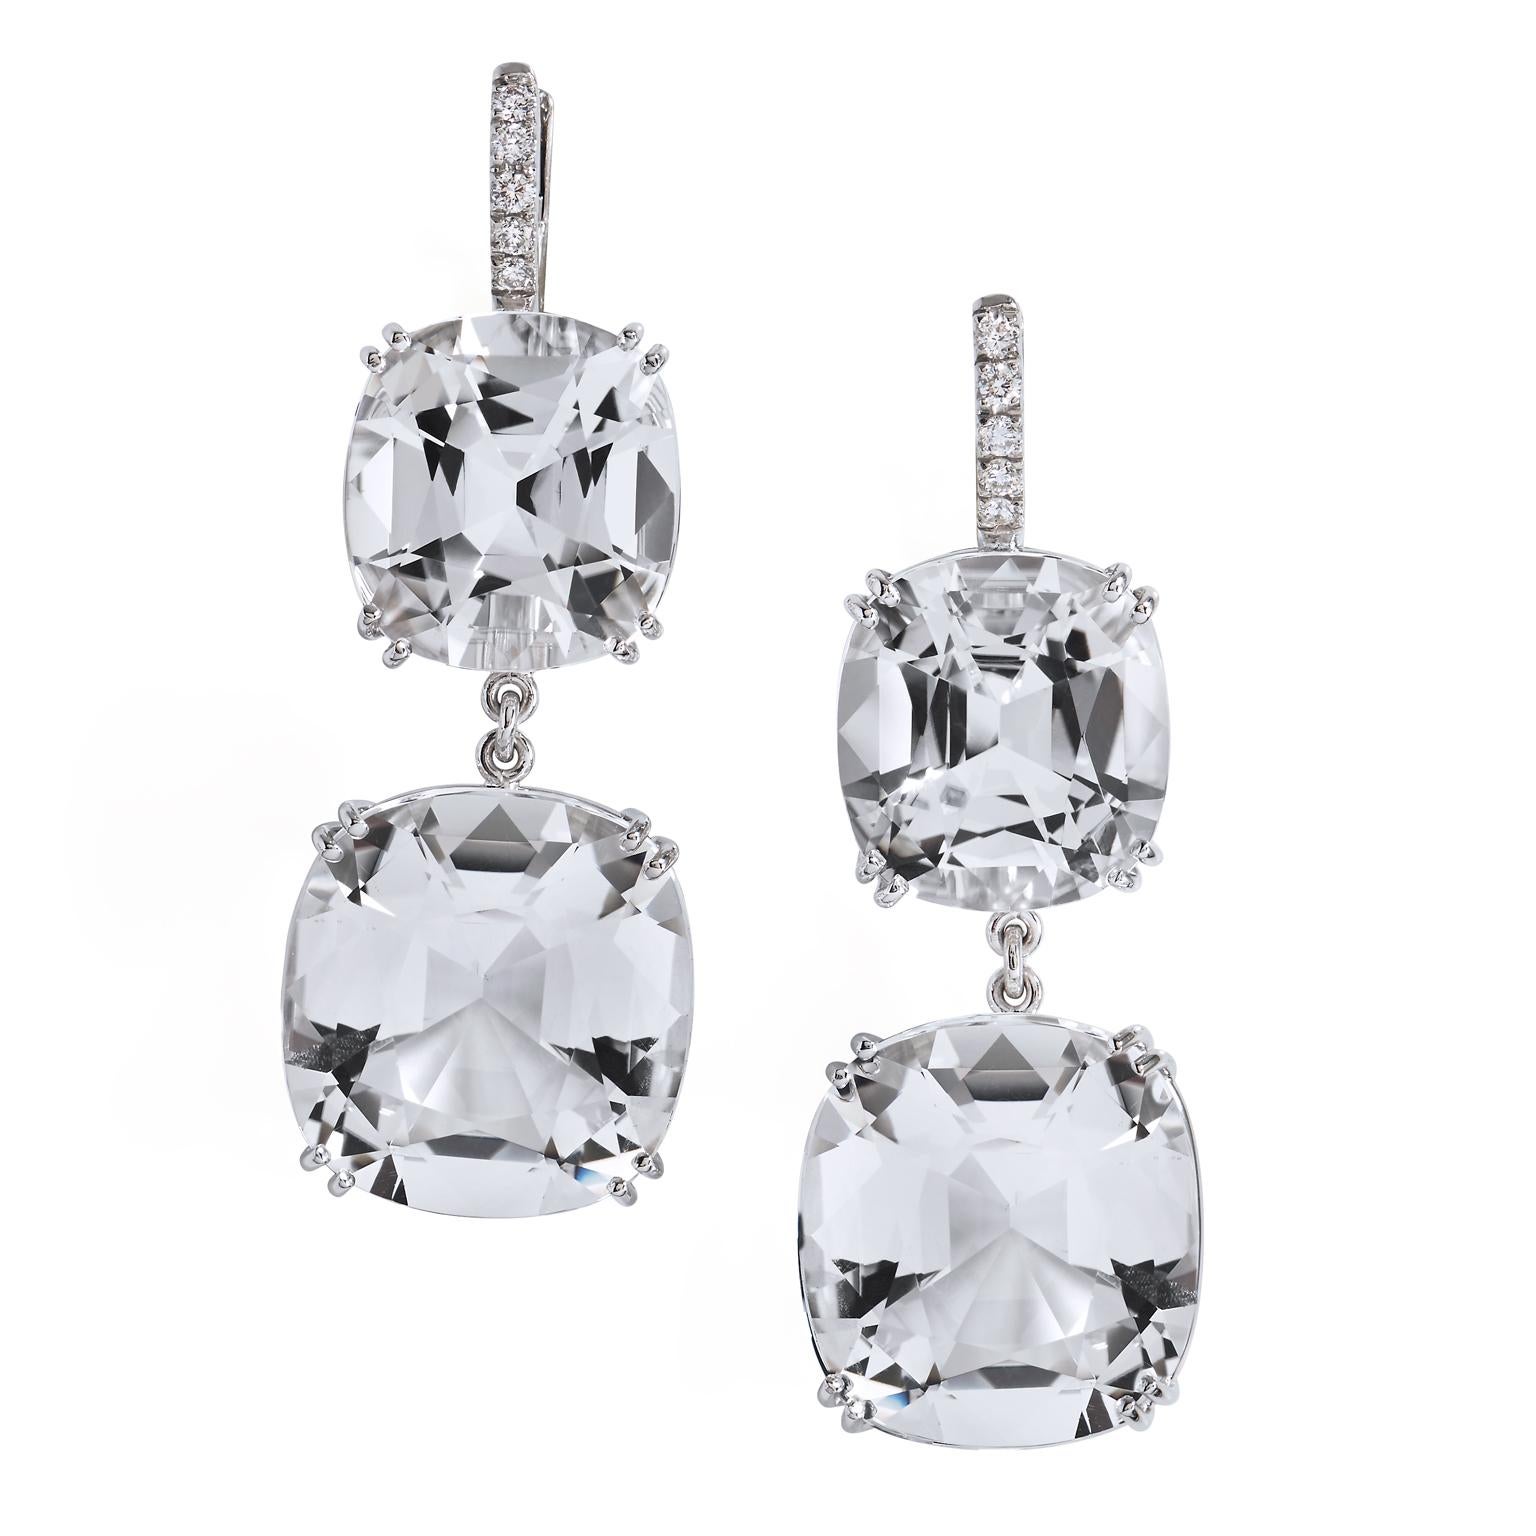 42.83 carats of Arkansas Quartz with Pave Diamonds 18 karat White Gold Earrings